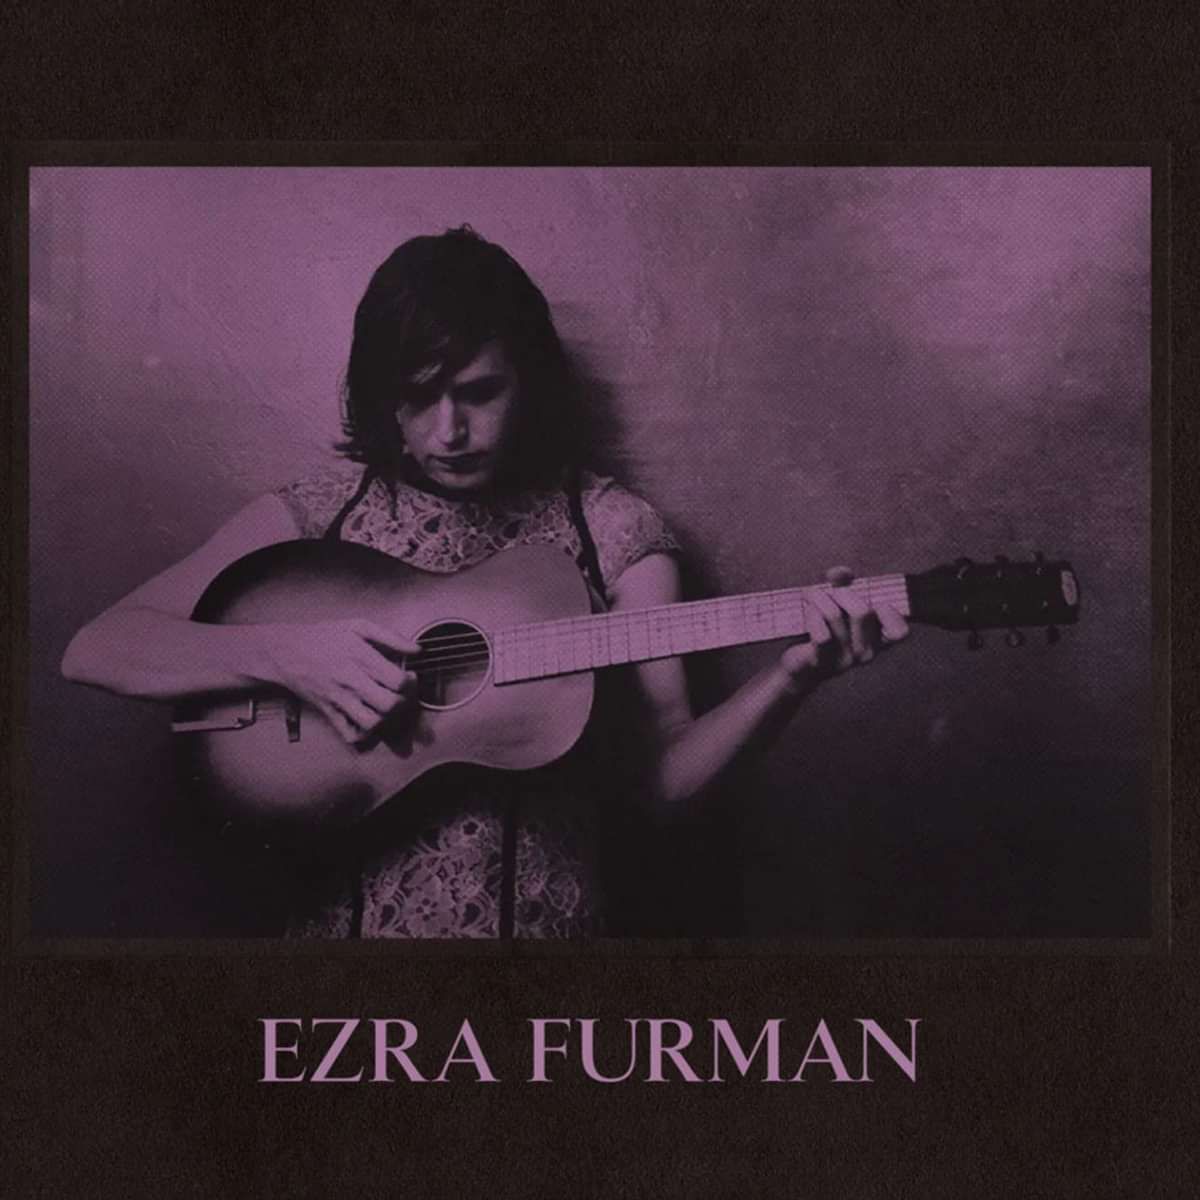 Ezra Furman - Love You So Bad ( TRADUÇÃO) 